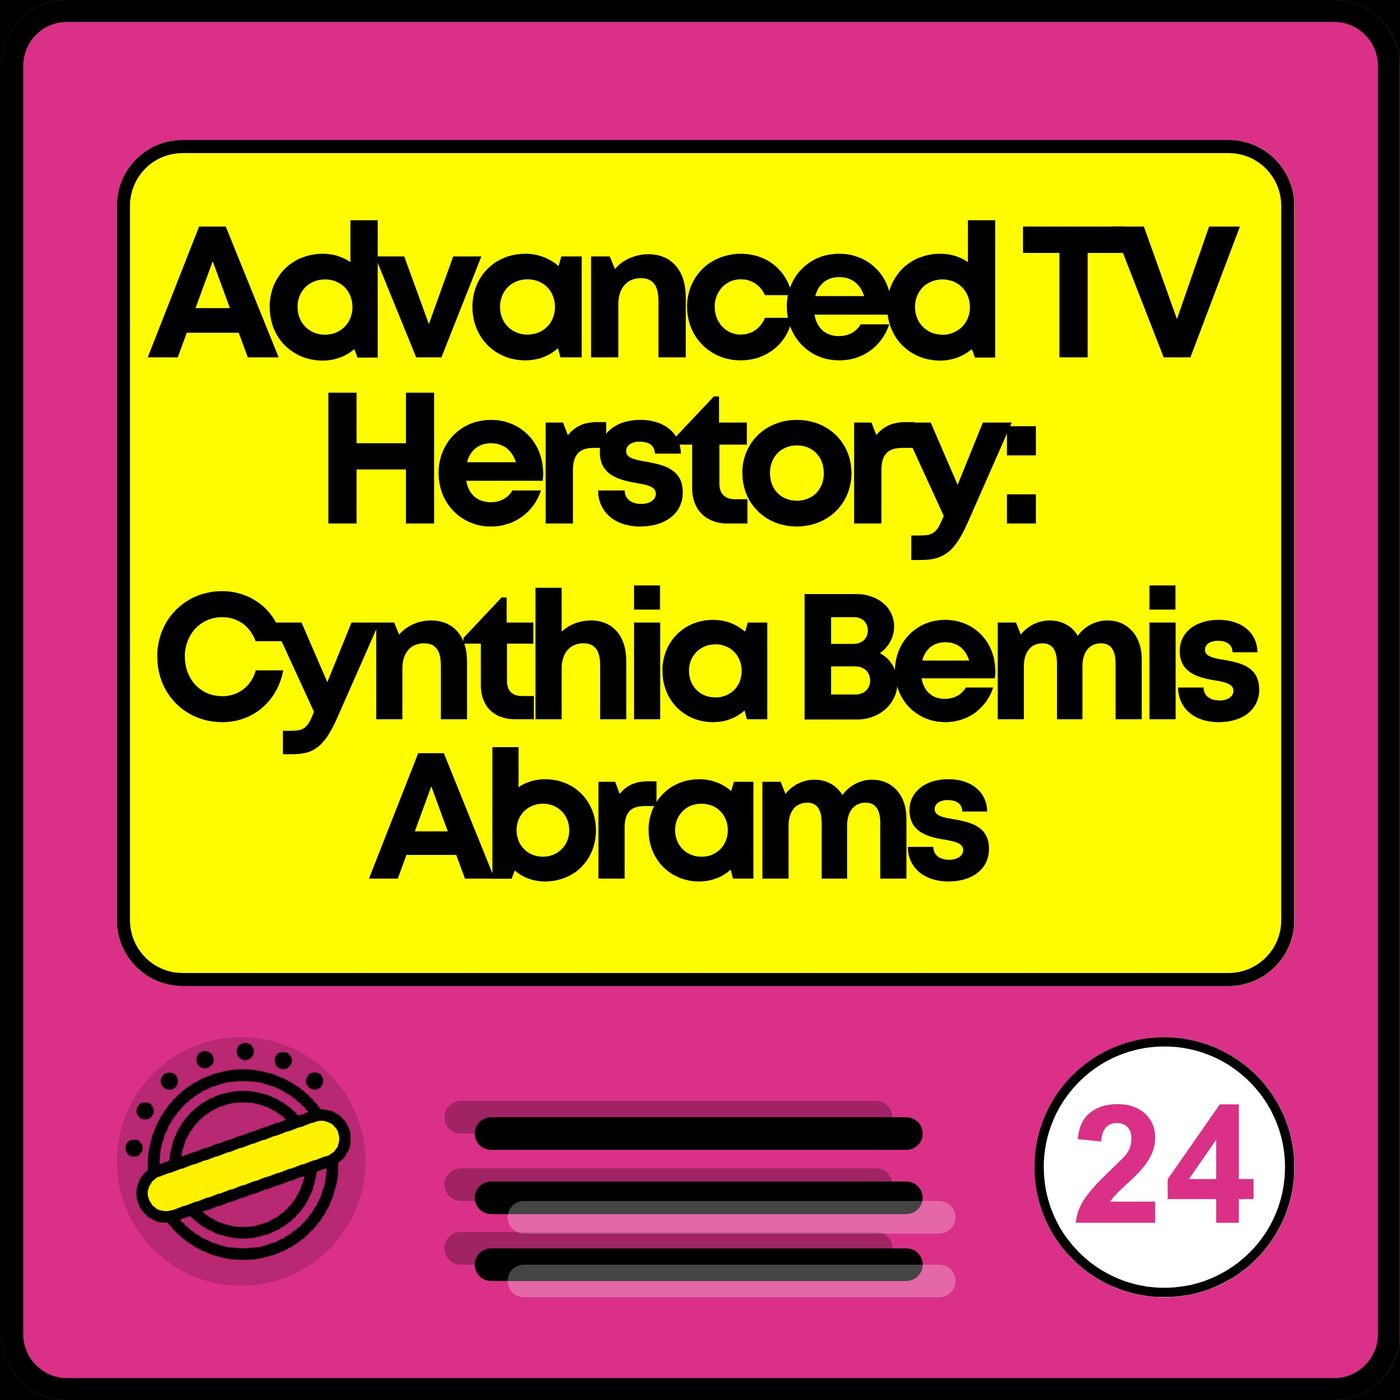 Welcome to Season 2: Advanced TV Herstory w/Cynthia Bemis Abrams, Part 1